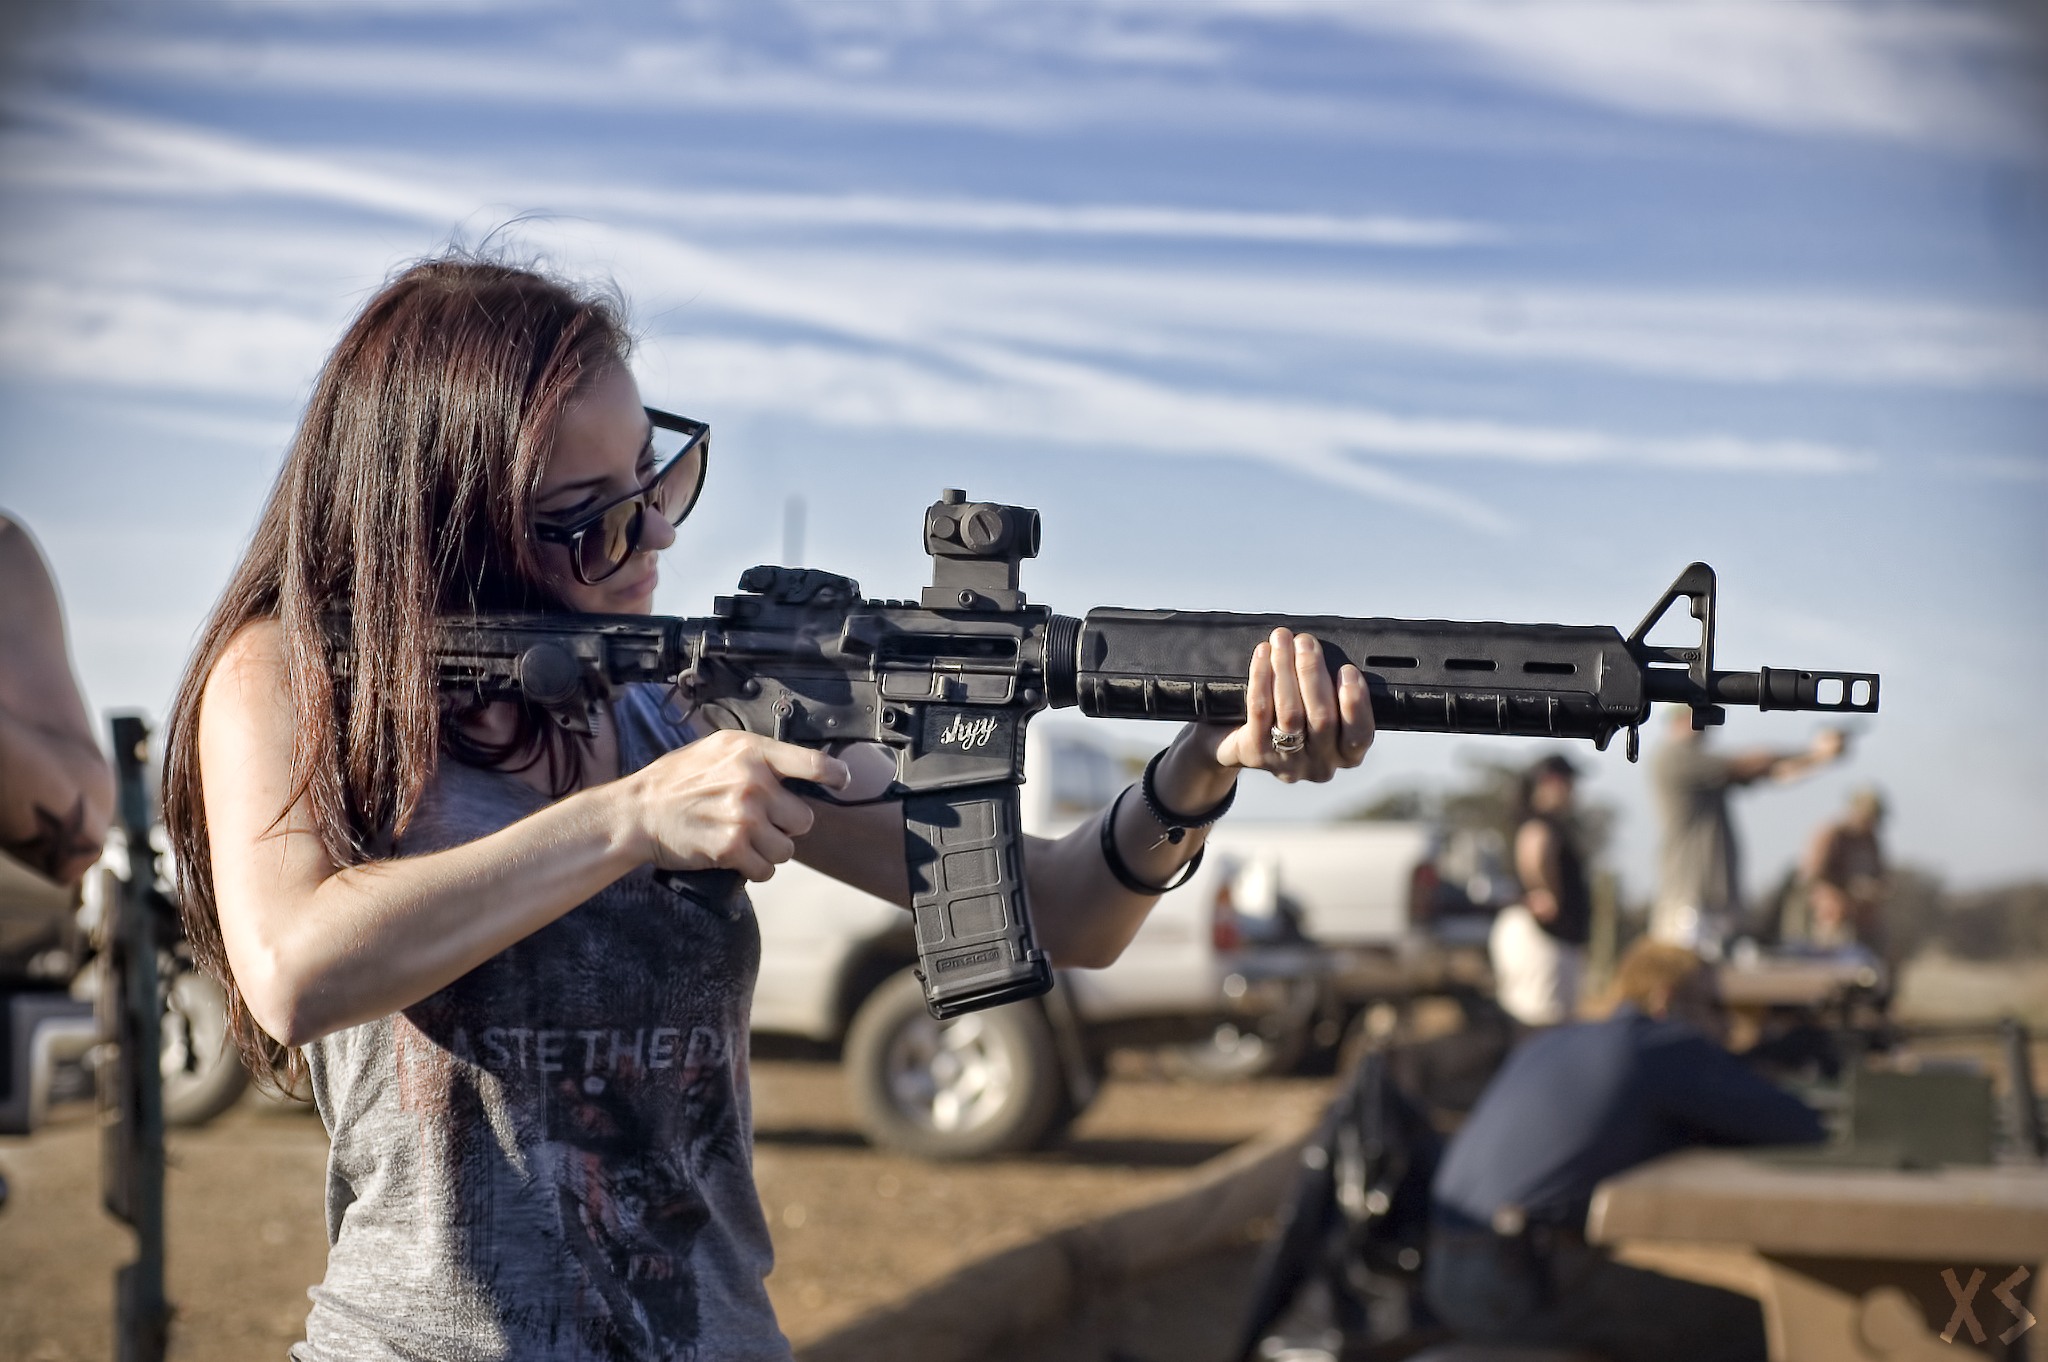 girl with gun wallpaper,gun,firearm,shooting,shooting sport,recreation